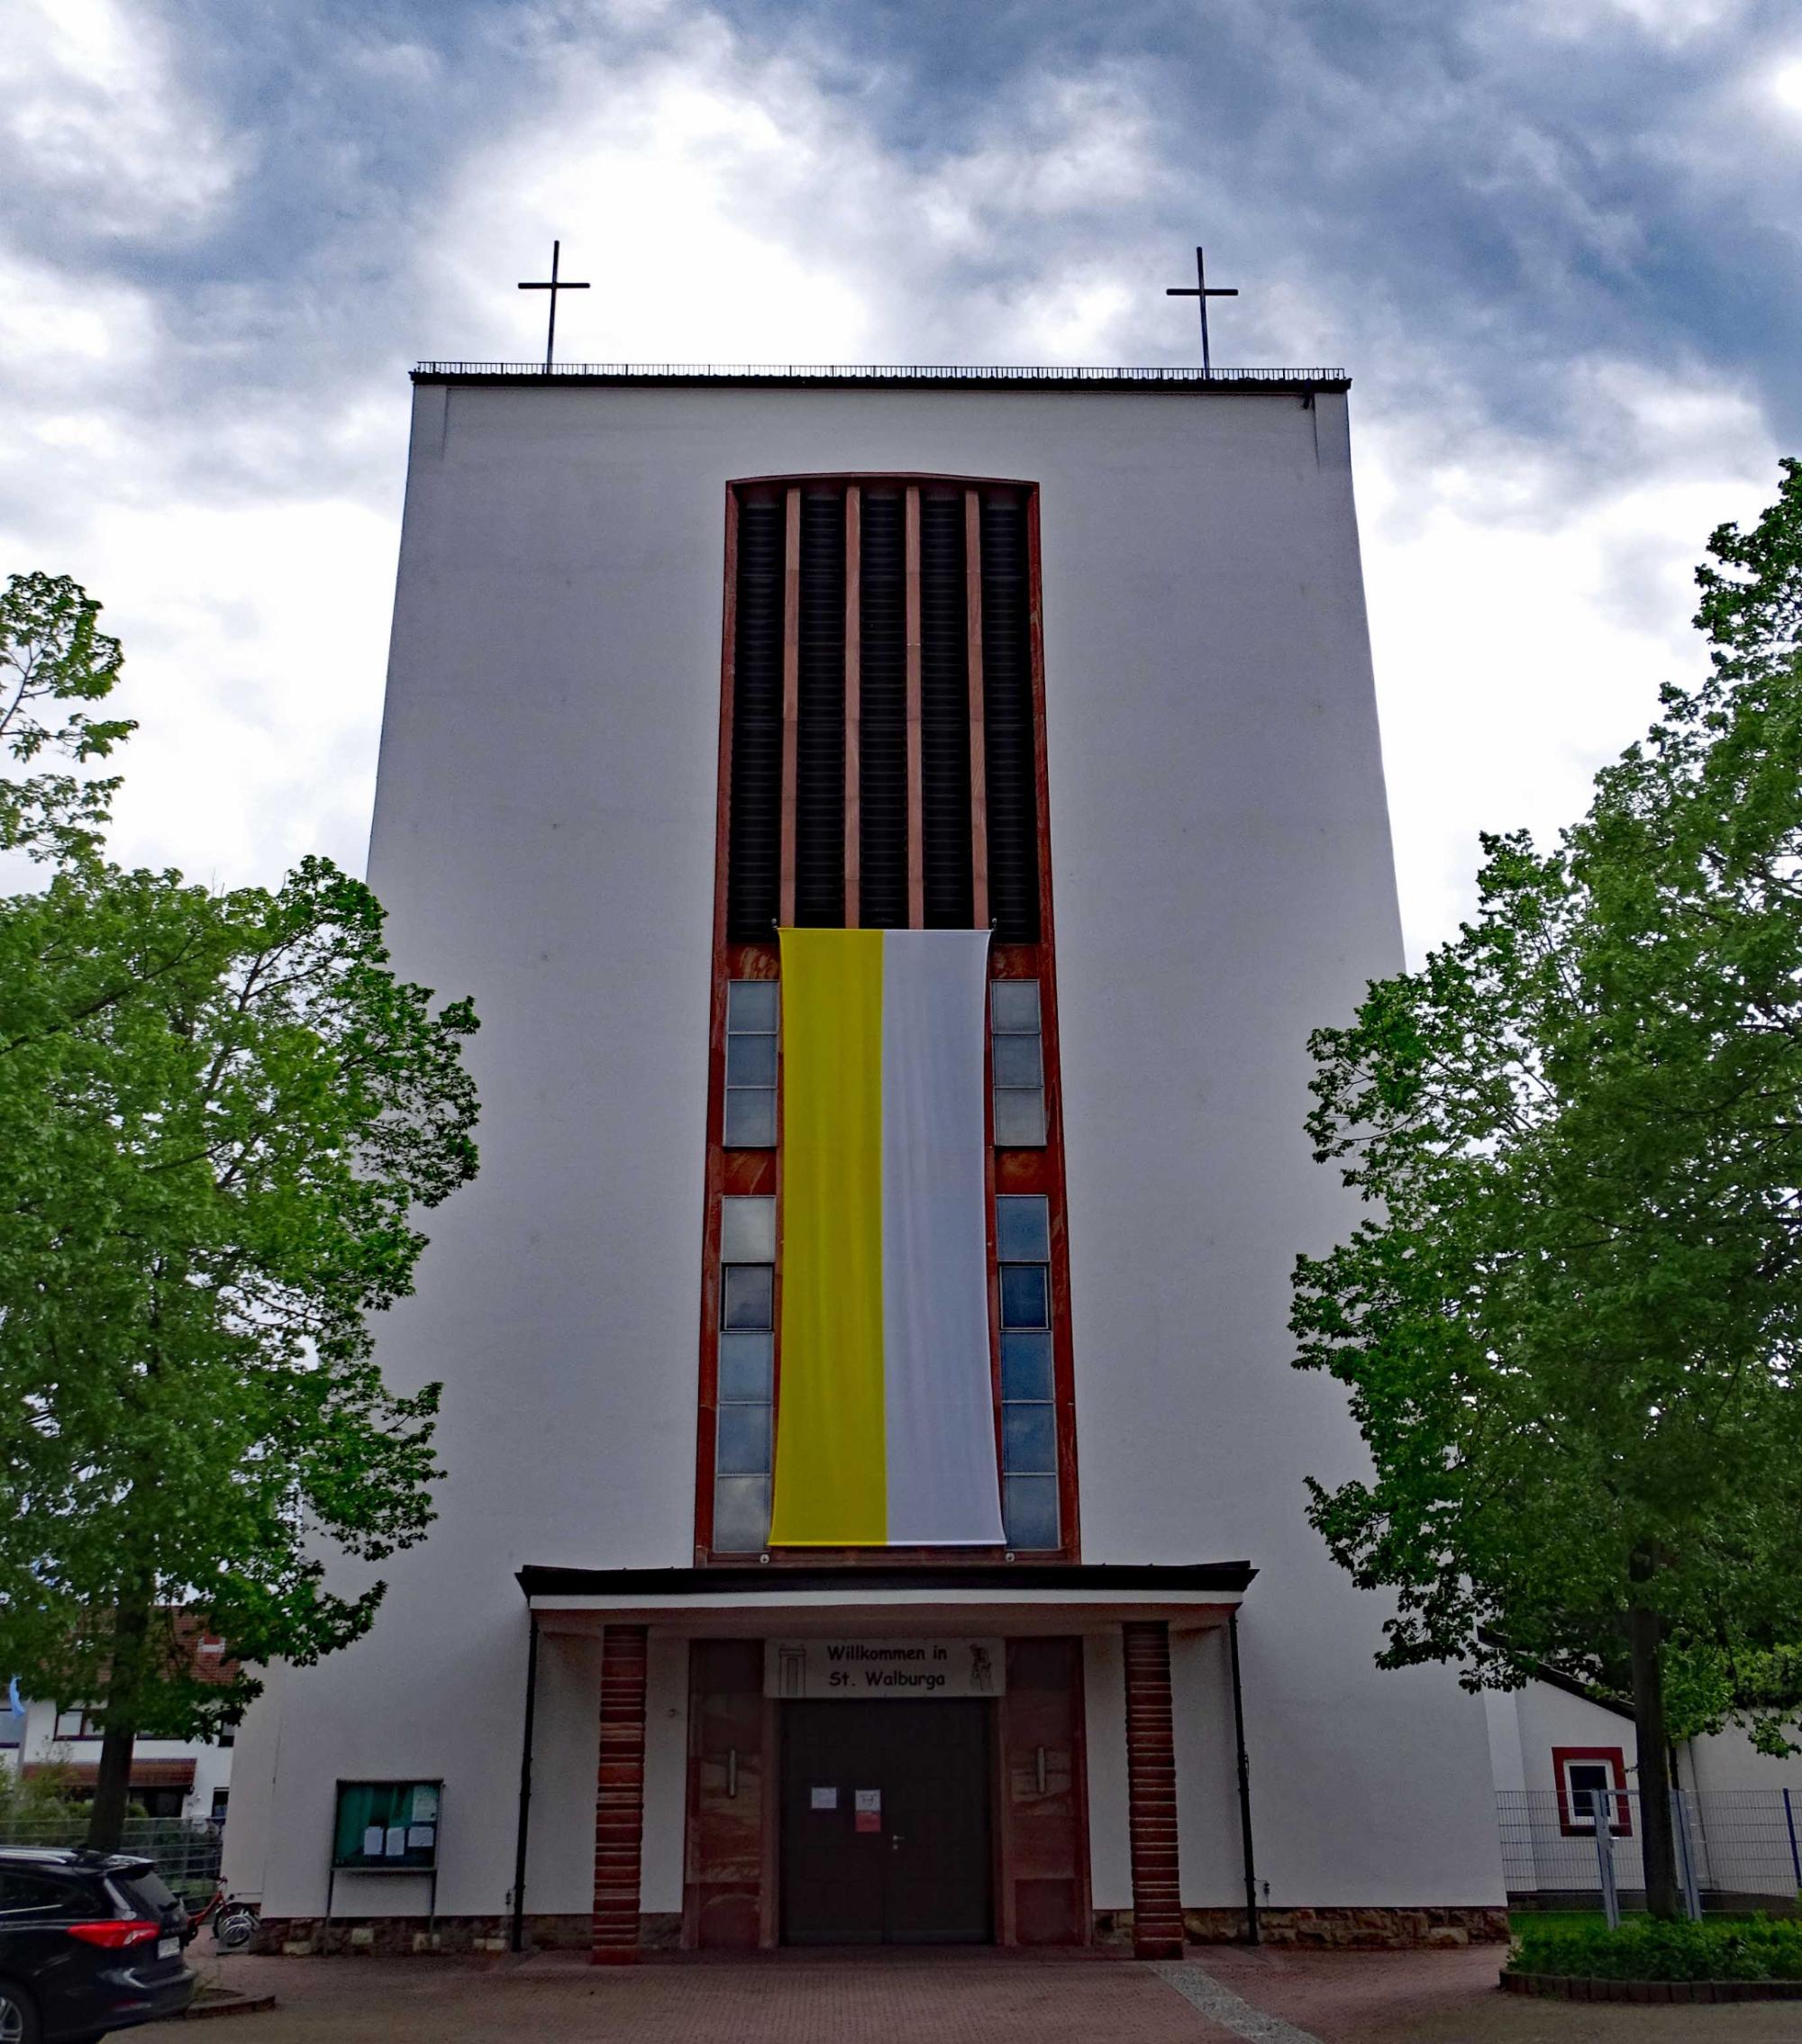 Katholische Pfarrkirche St. Walburga Groß-Gerau